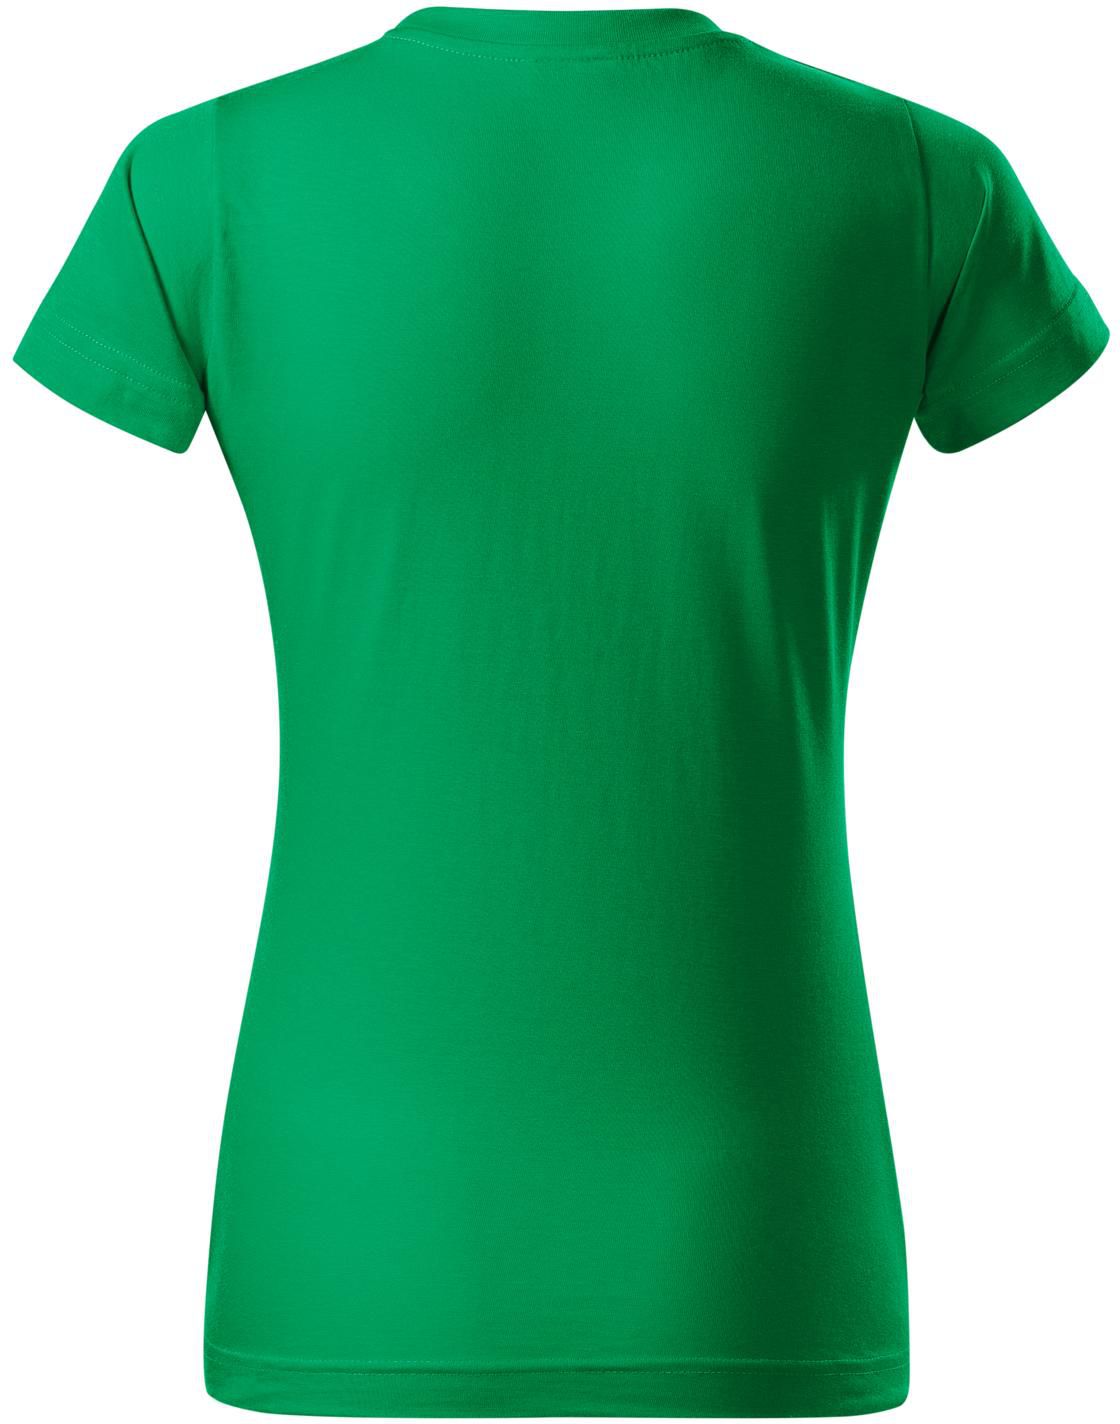 MALFINI T-Shirt Damen Basic 134